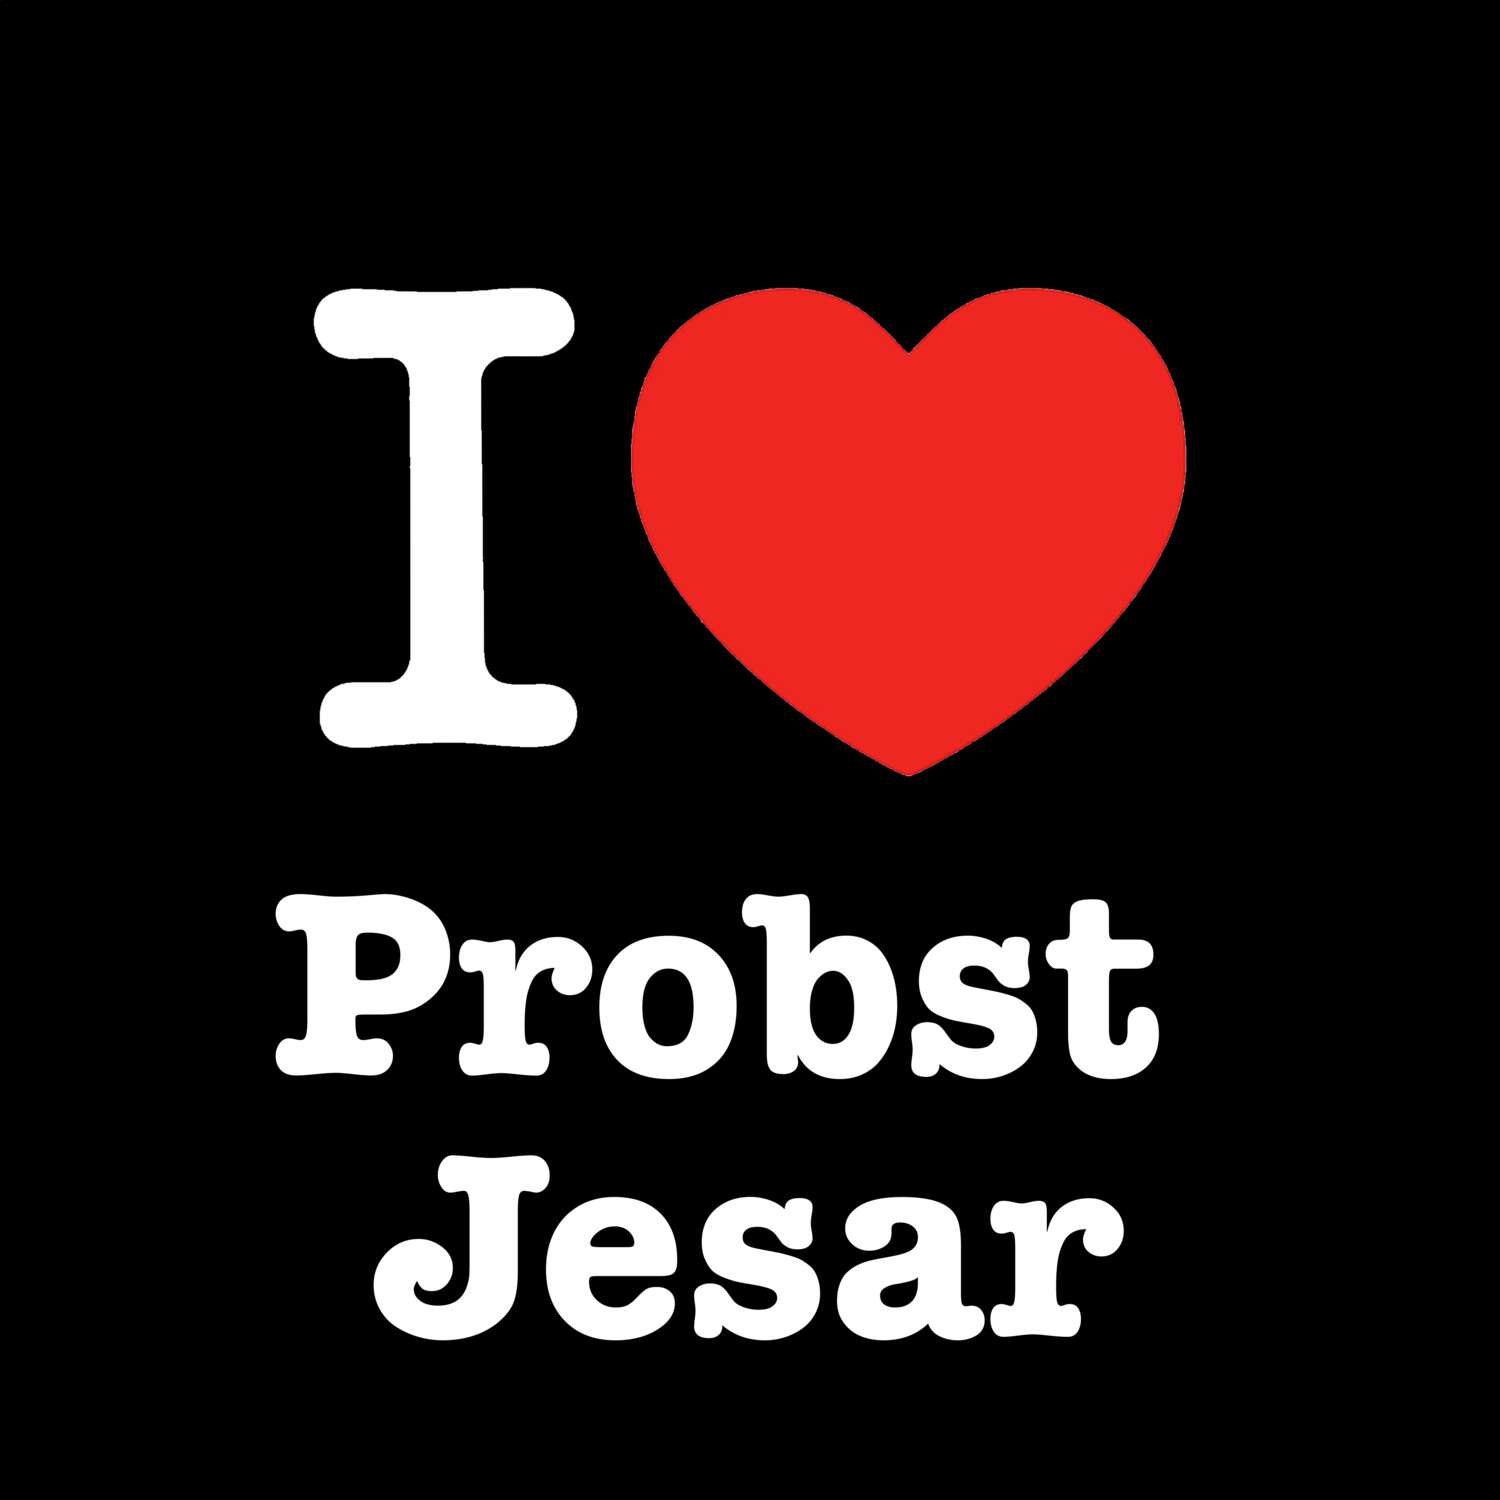 Probst Jesar T-Shirt »I love«